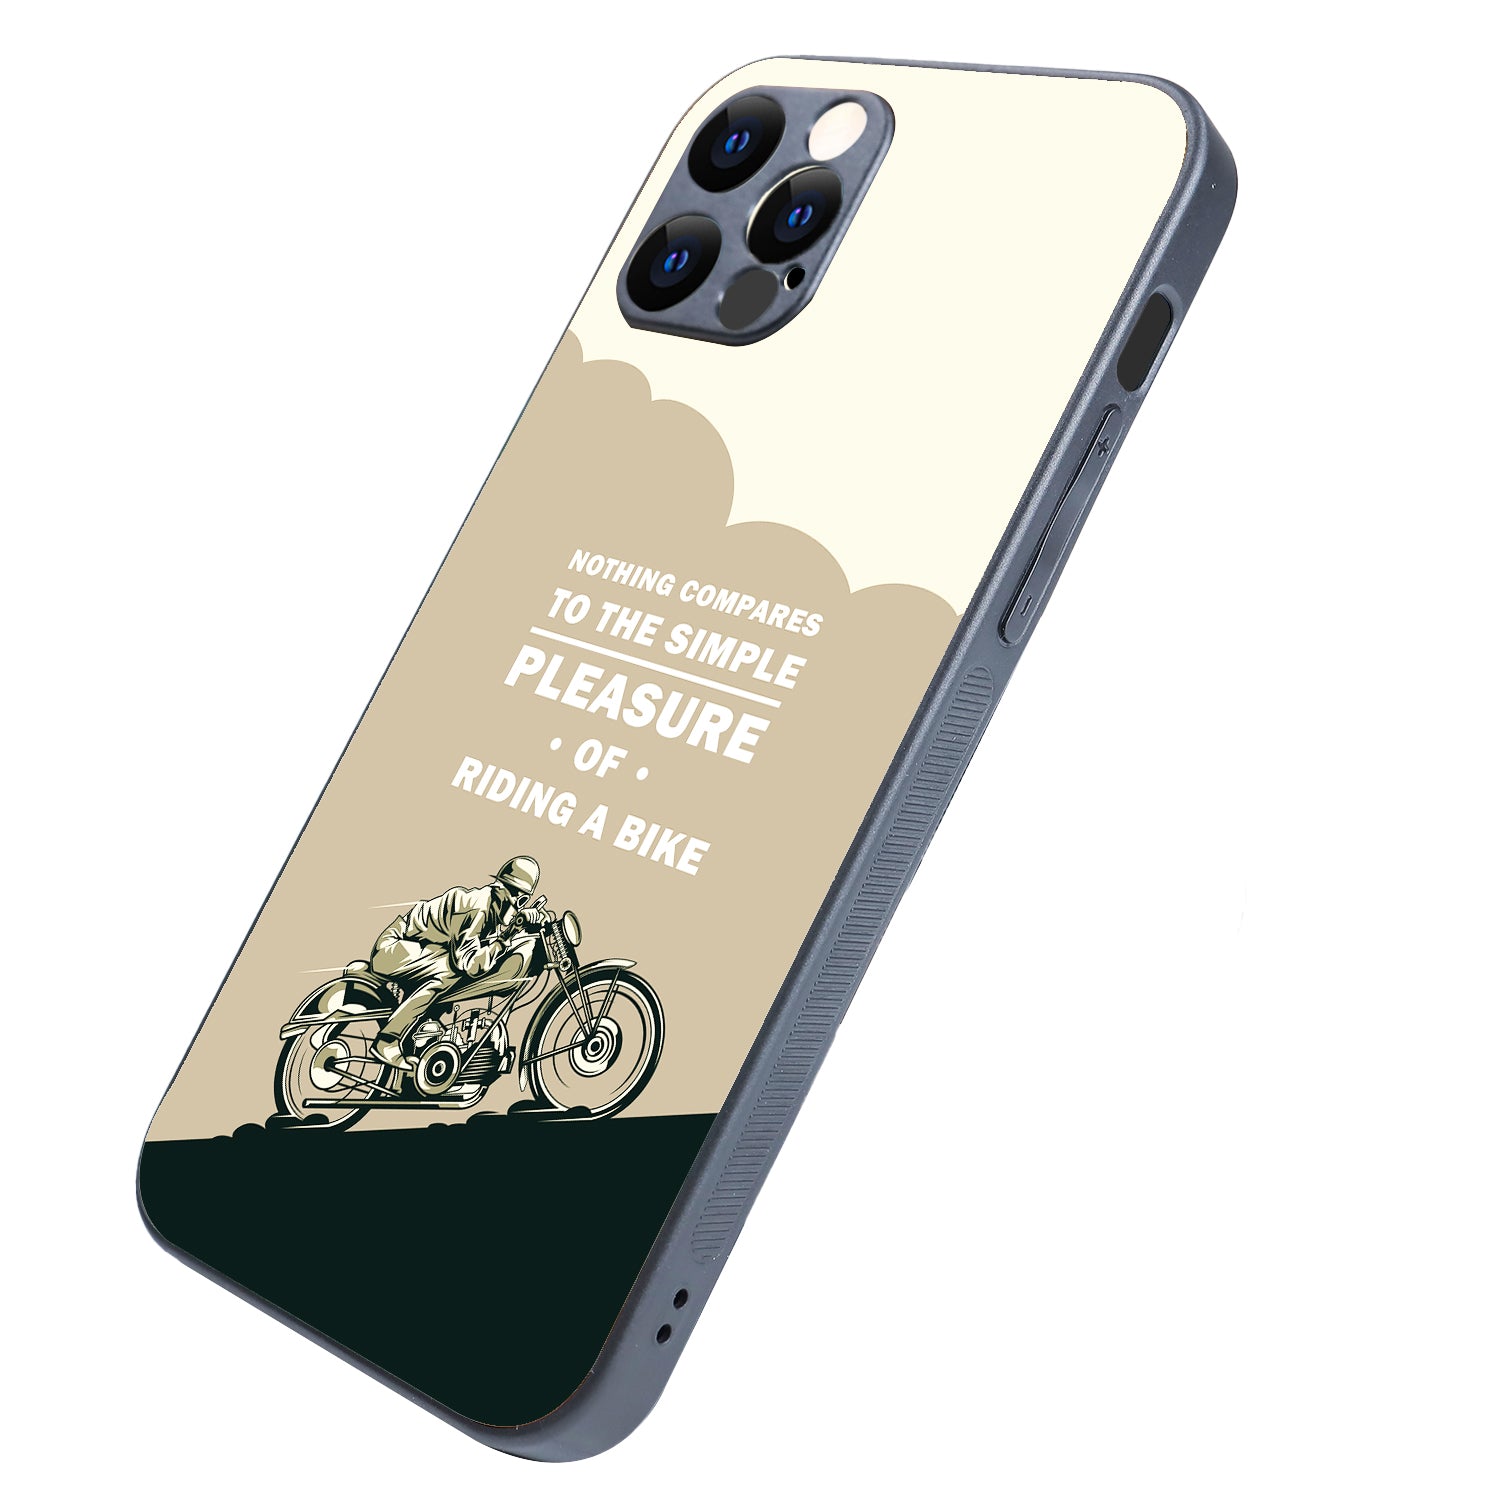 Pleasure of Riding Bike Travel iPhone 12 Pro Case